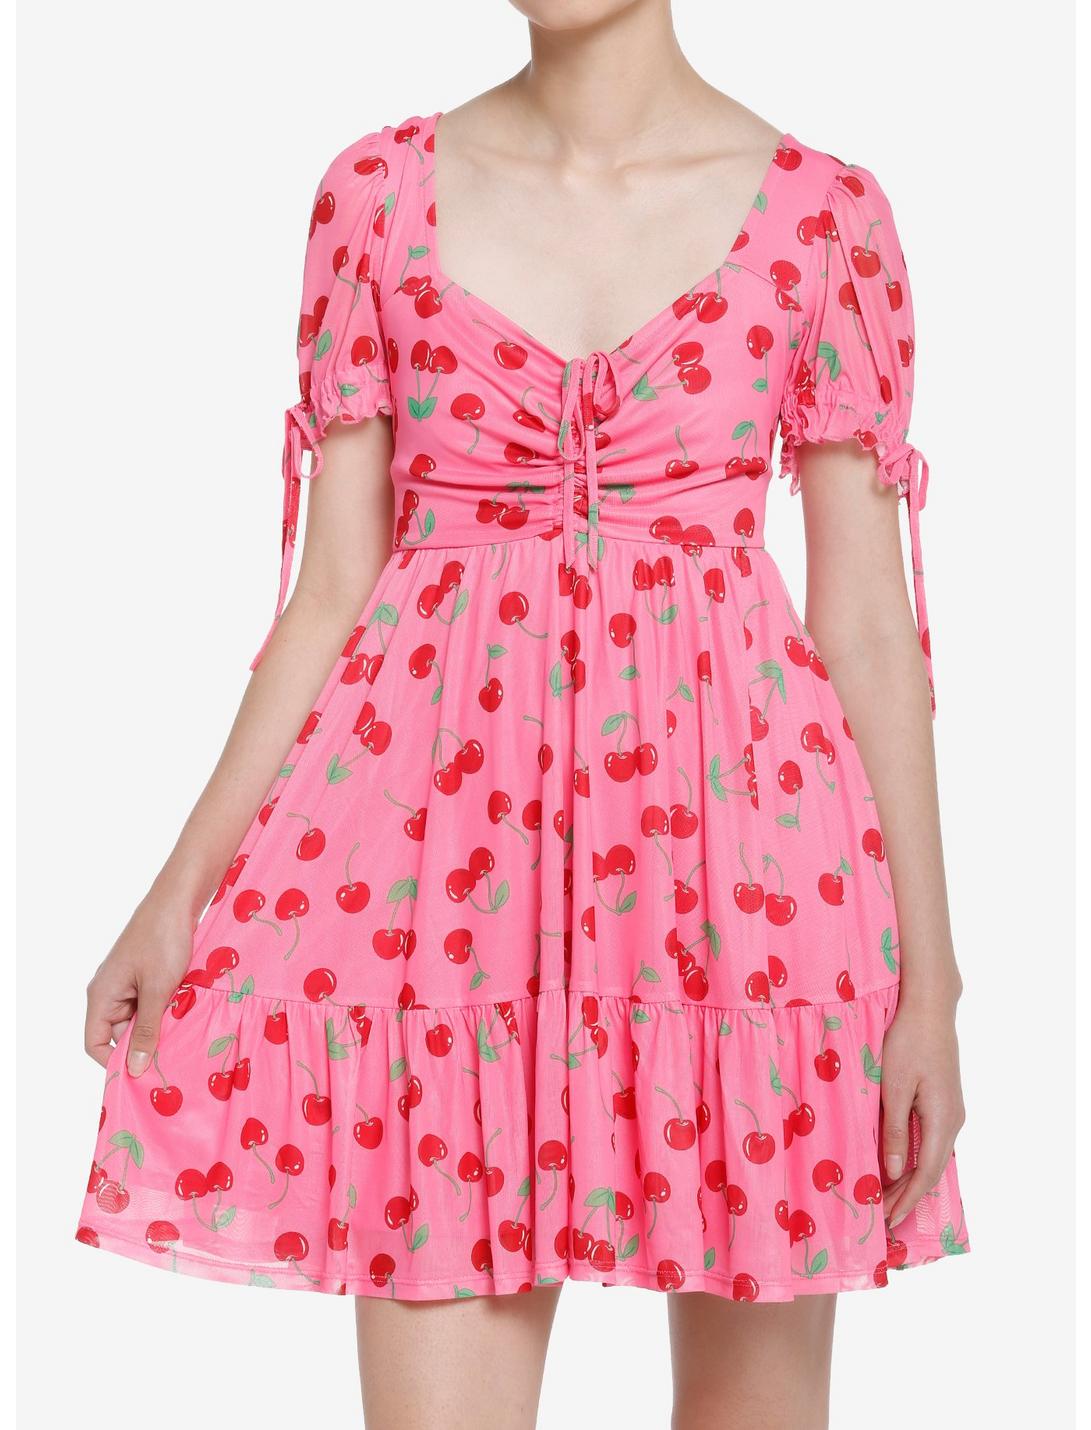 Sweet Society Cherries Pink Puff Sleeve Dress, PINK, hi-res